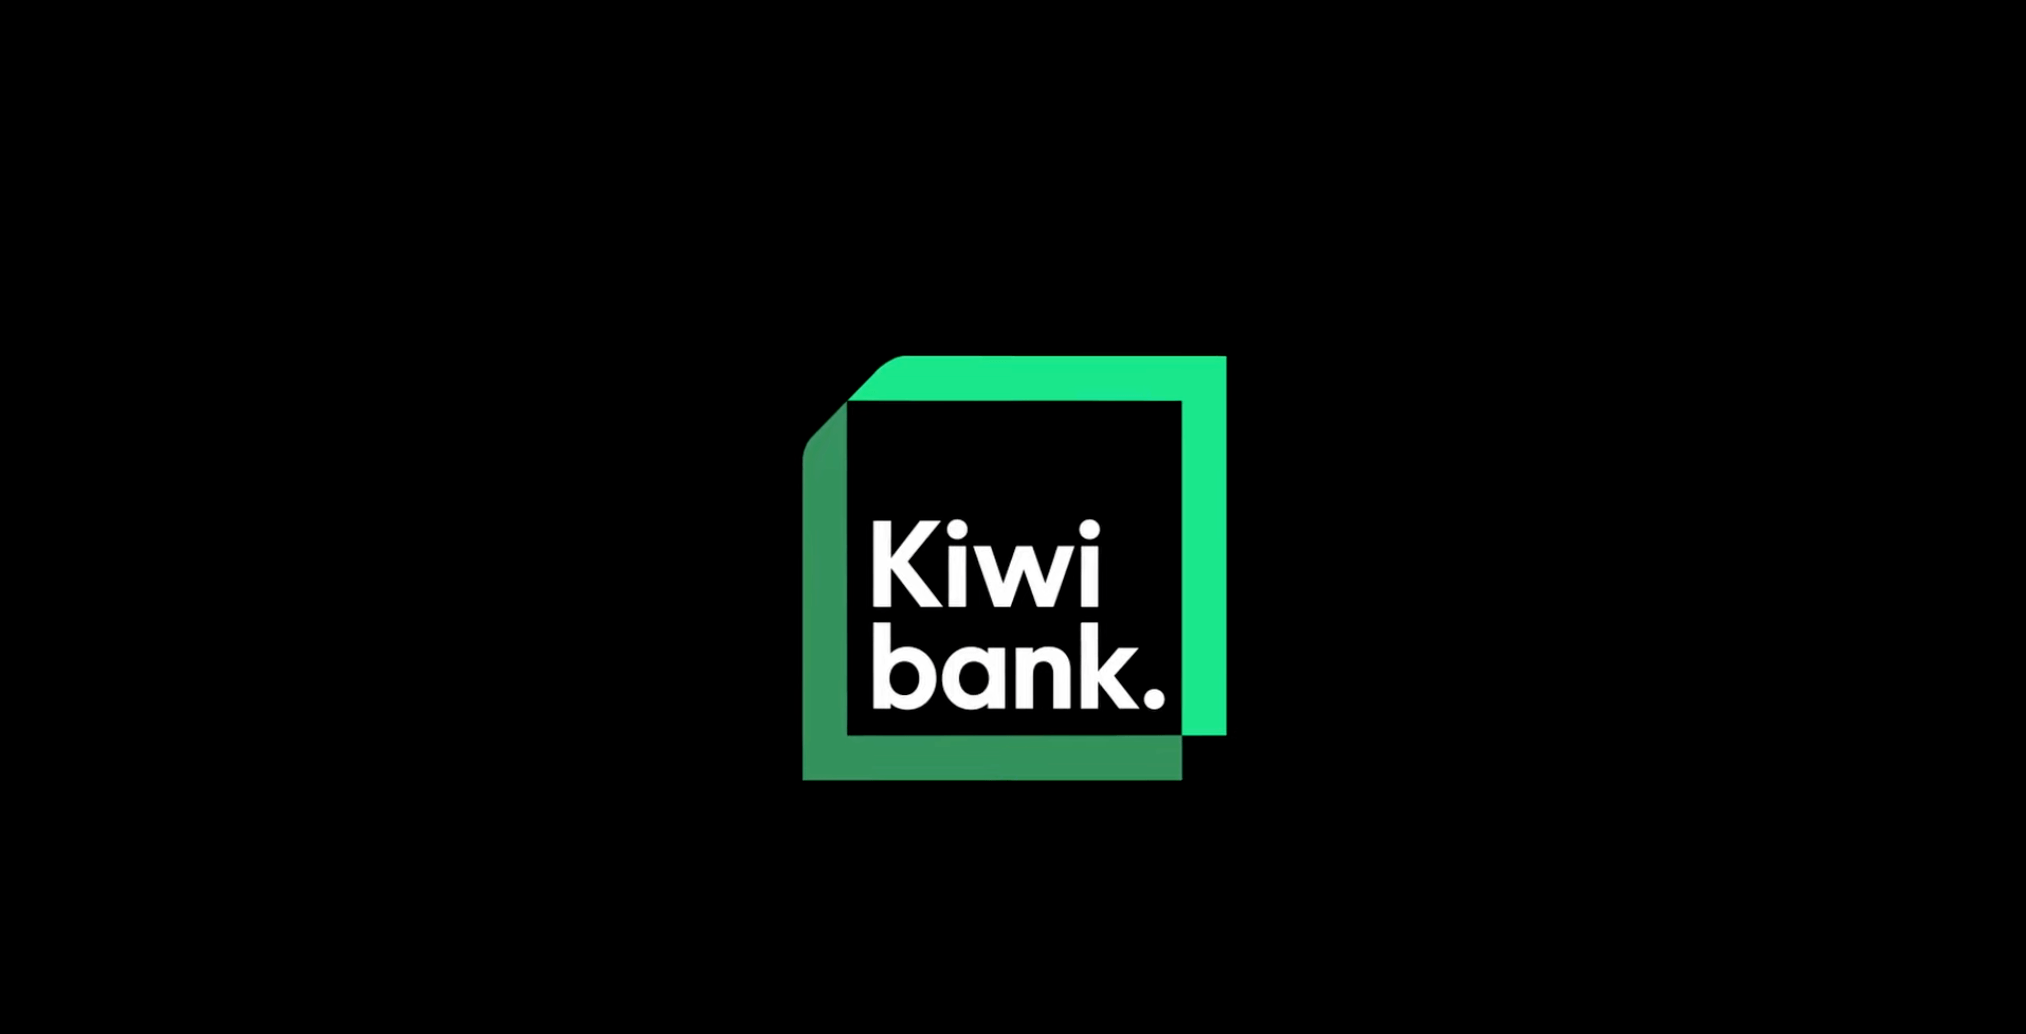 Kiwibank NZ rebrand image